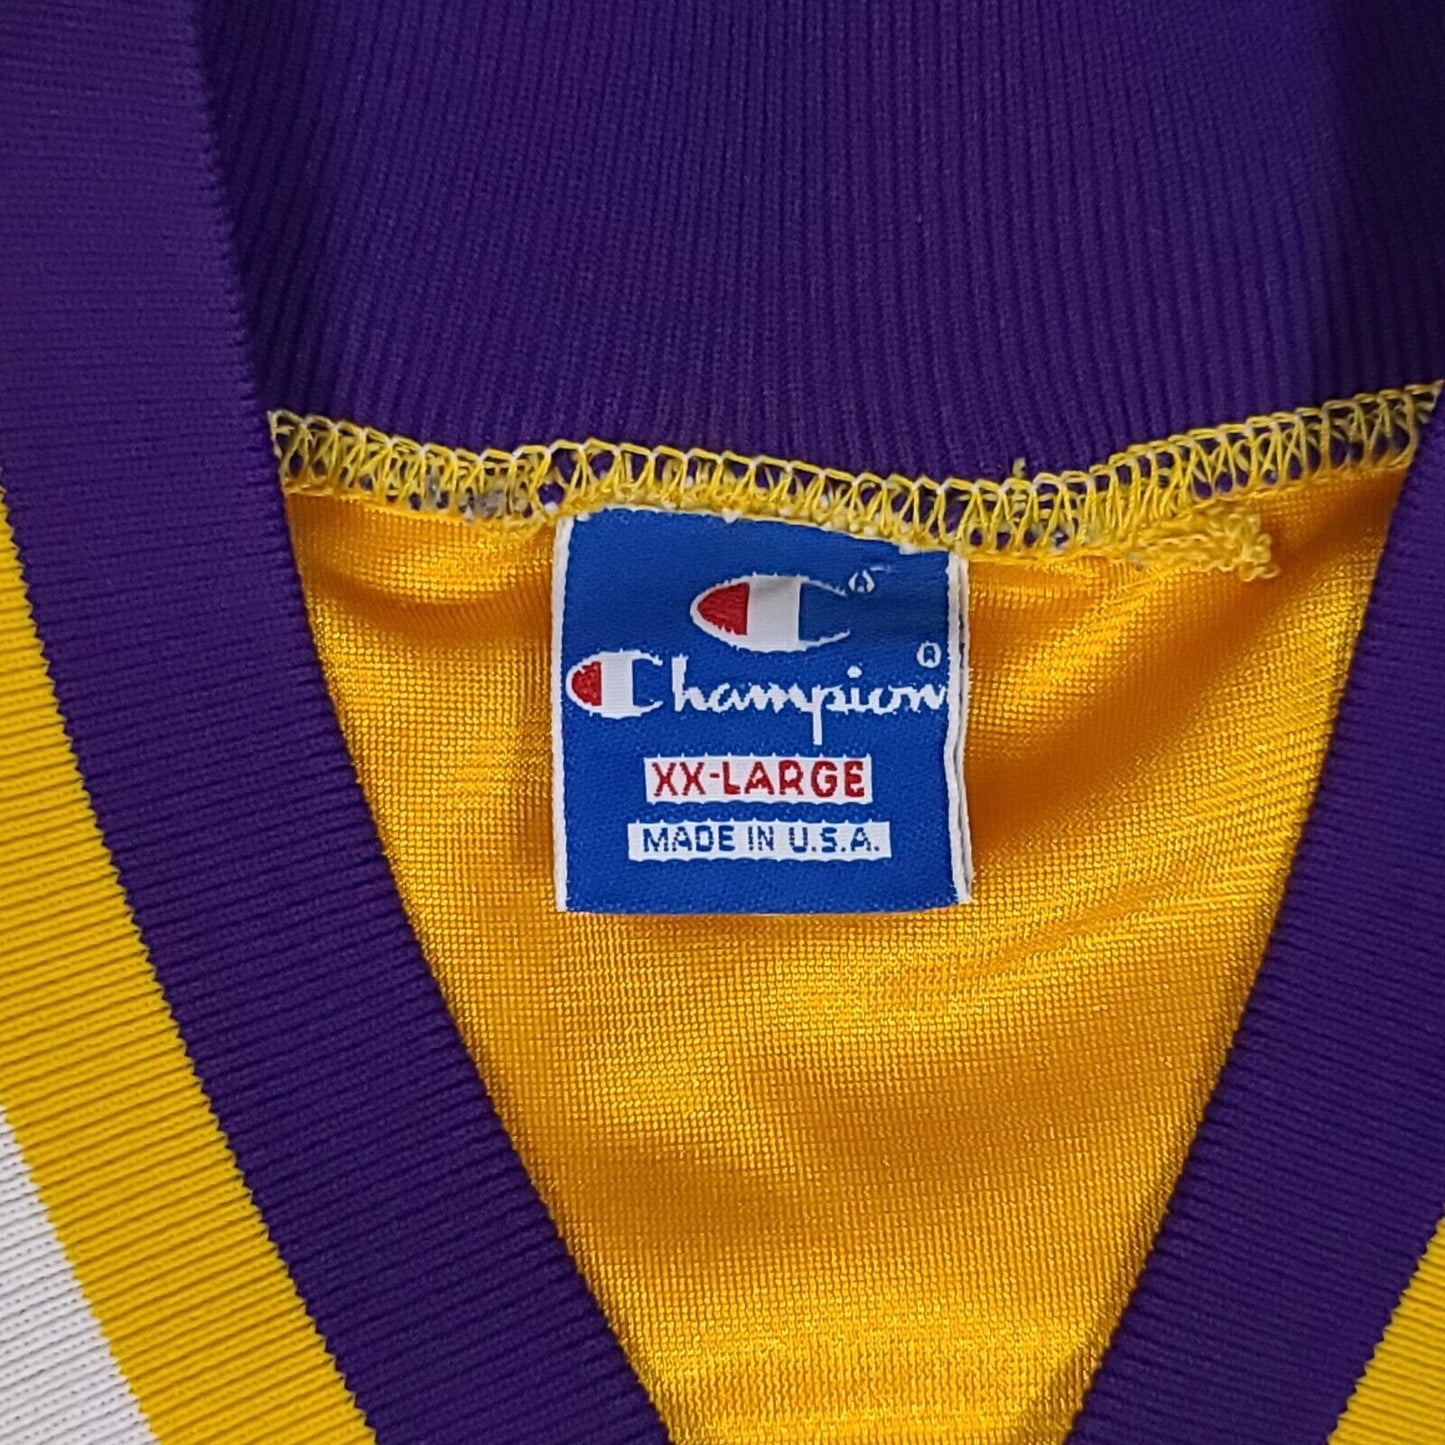 Wauconda Bulldogs High School Purple Gold Champion Warm Up Jacket